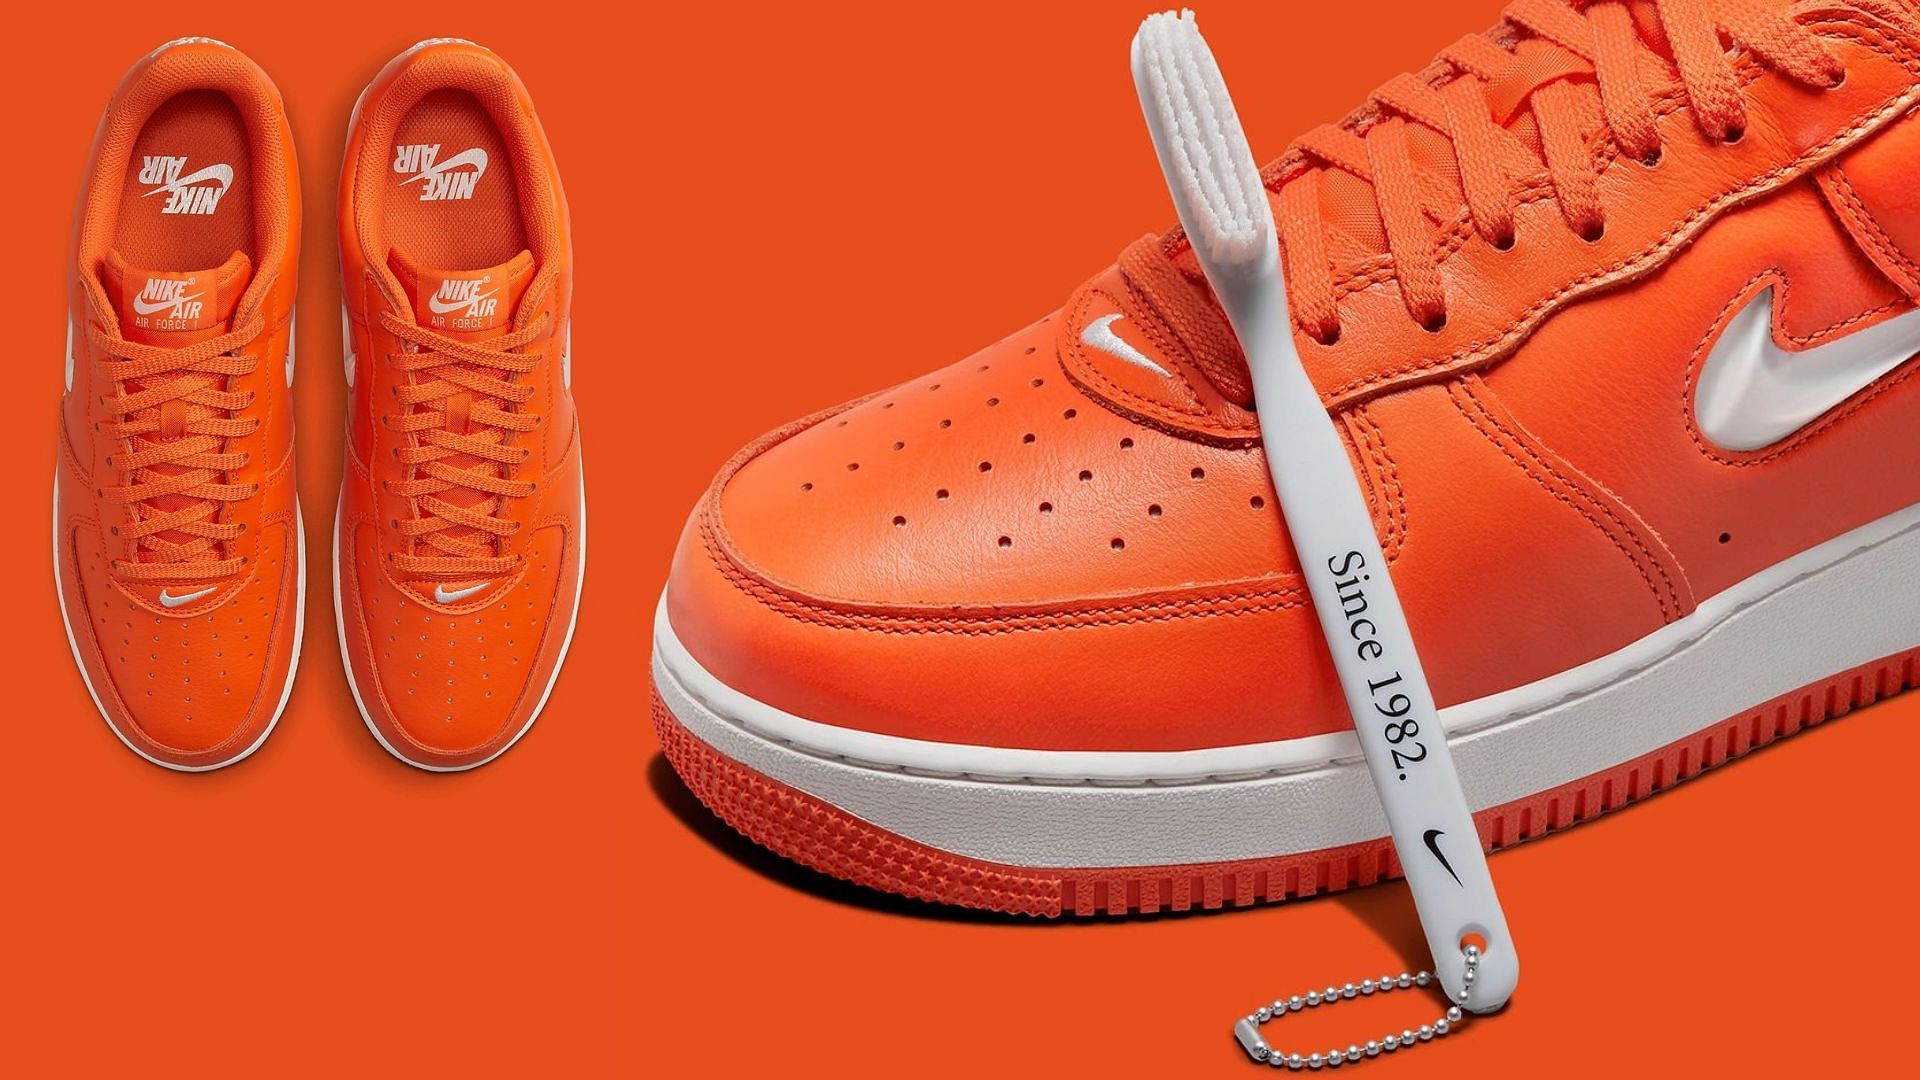 Nike Air Force 1 Low University Orange shoes (Image via Nike)